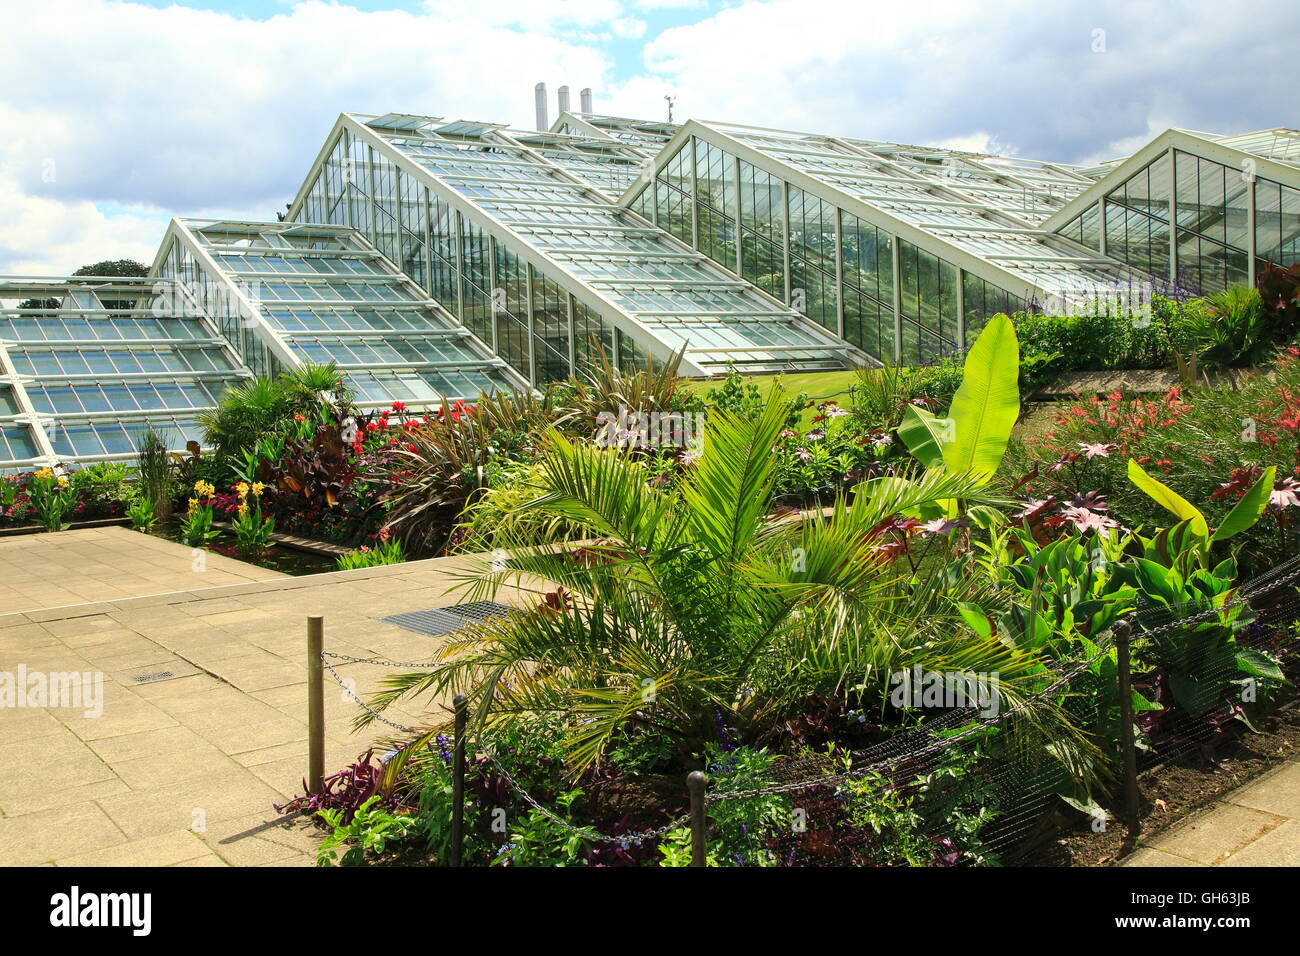 Princess of Wales conservatory serres, Kew Gardens, London, England, UK Banque D'Images